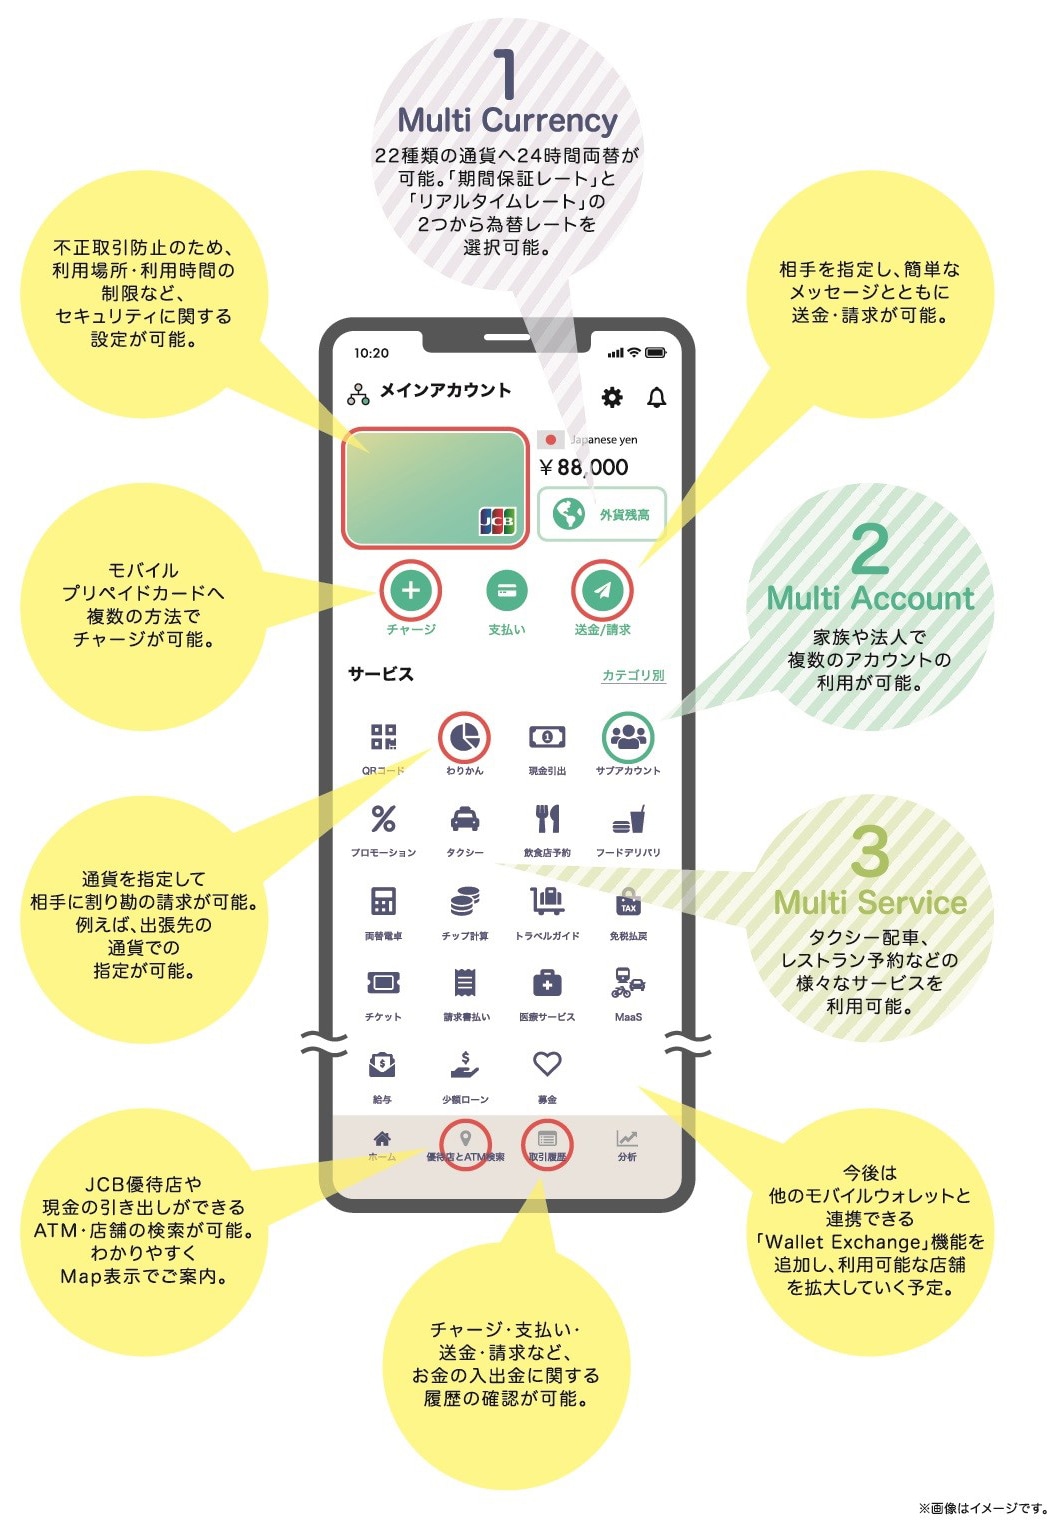 「JCB Mobile Wallet(仮称)」のイメージ画面